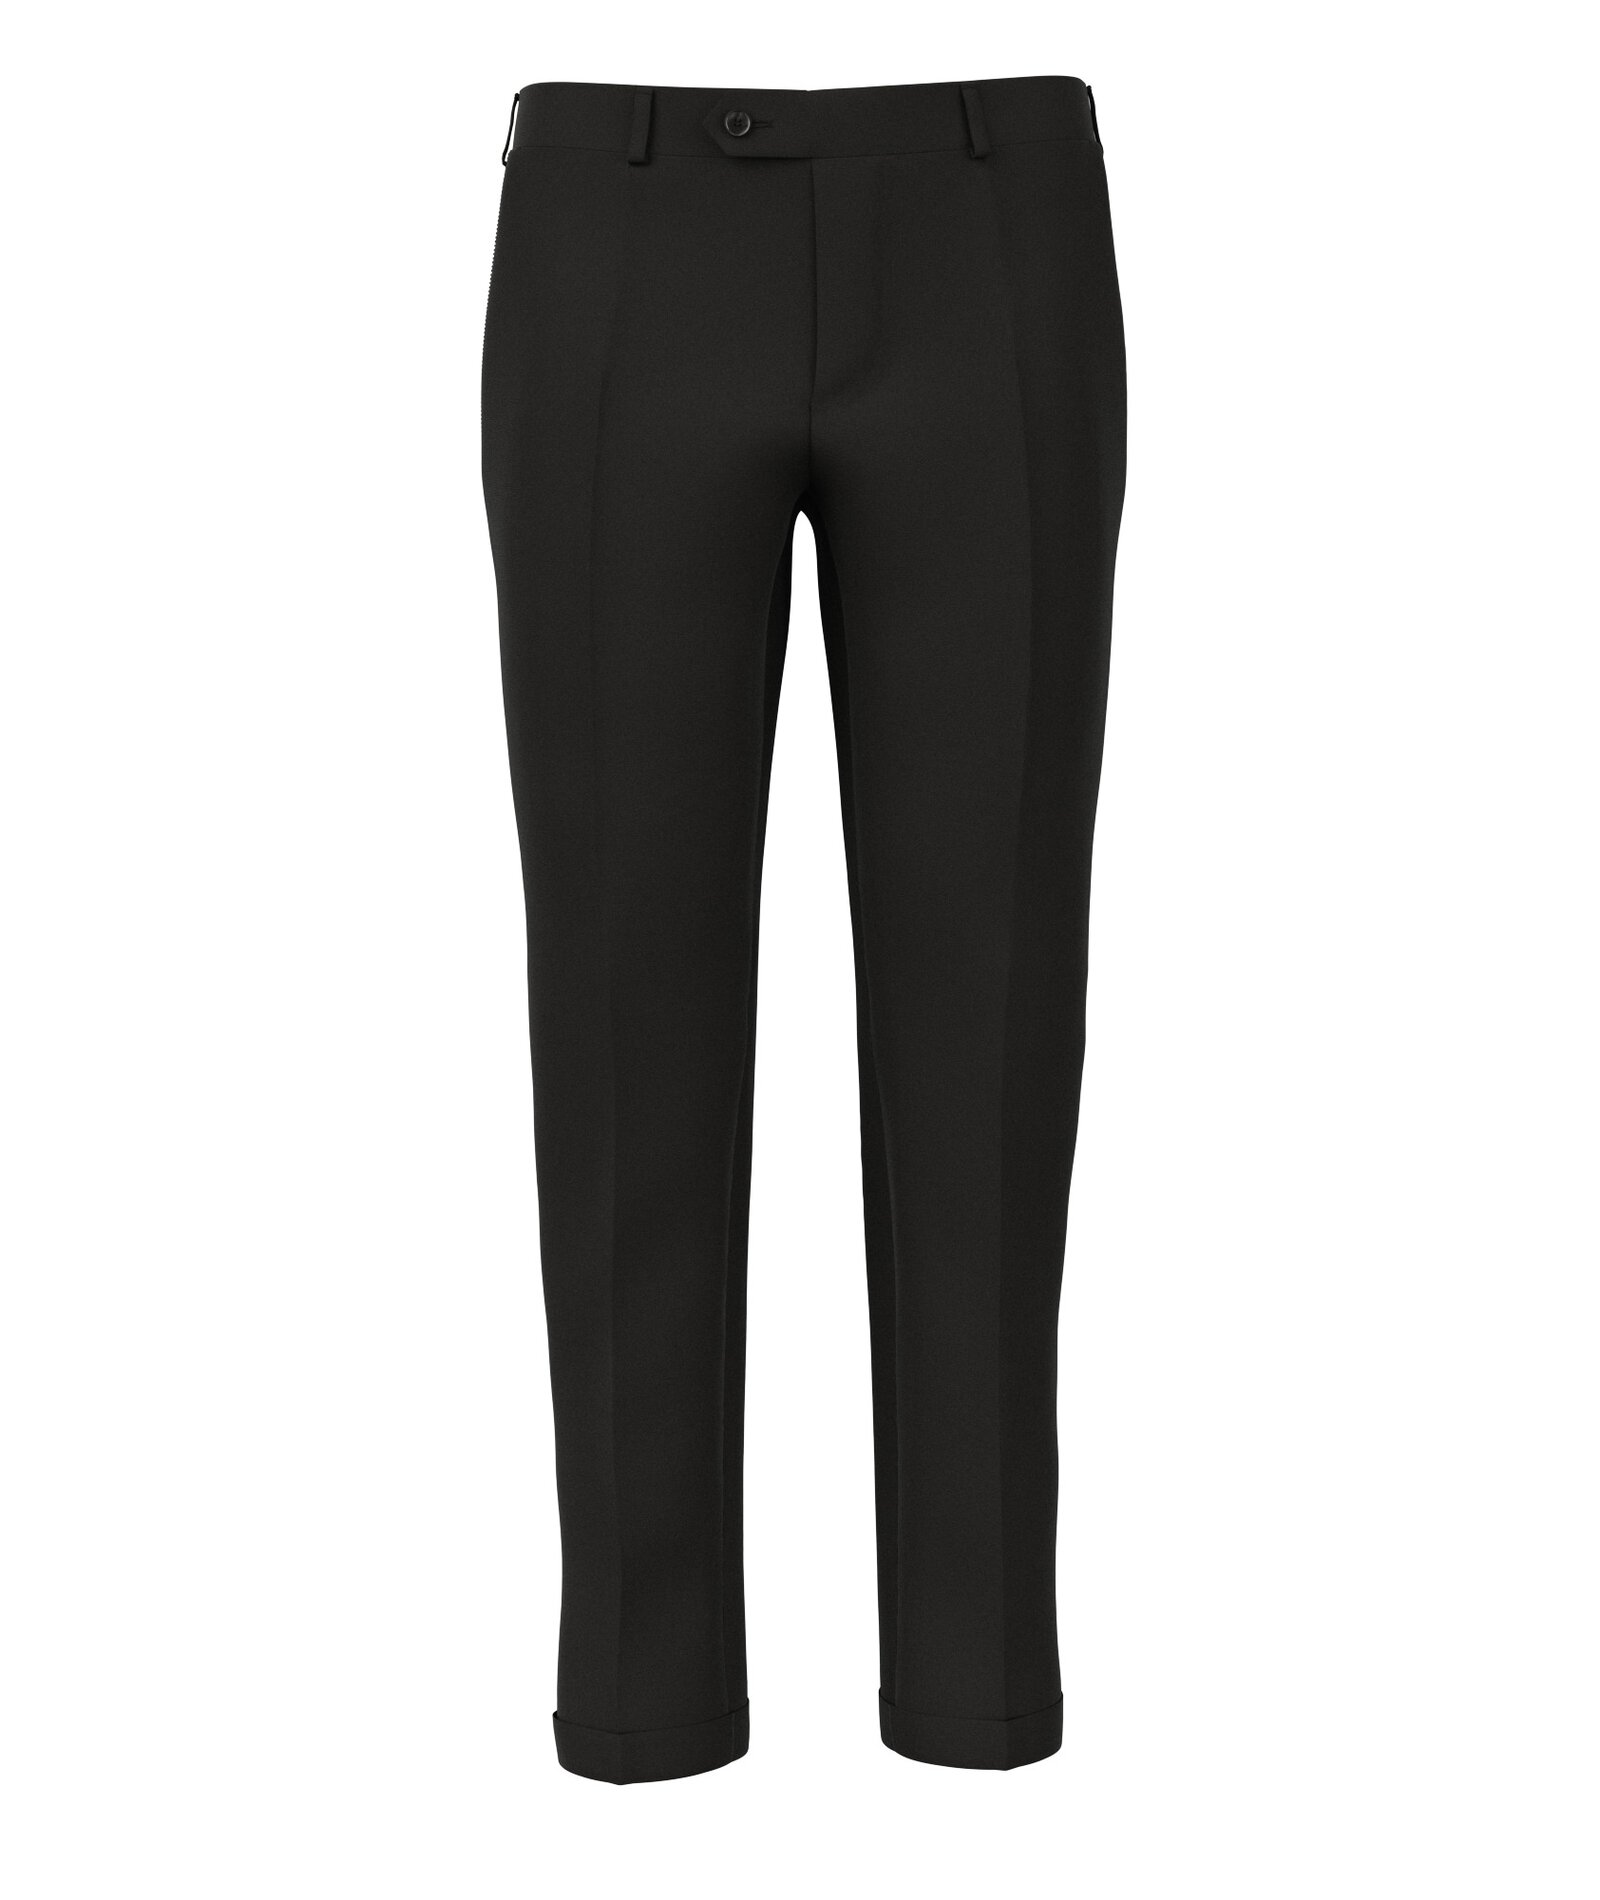 Image of Pantaloni da uomo su misura, Reda, Nero Lana Microdesign, Quattro Stagioni | Lanieri